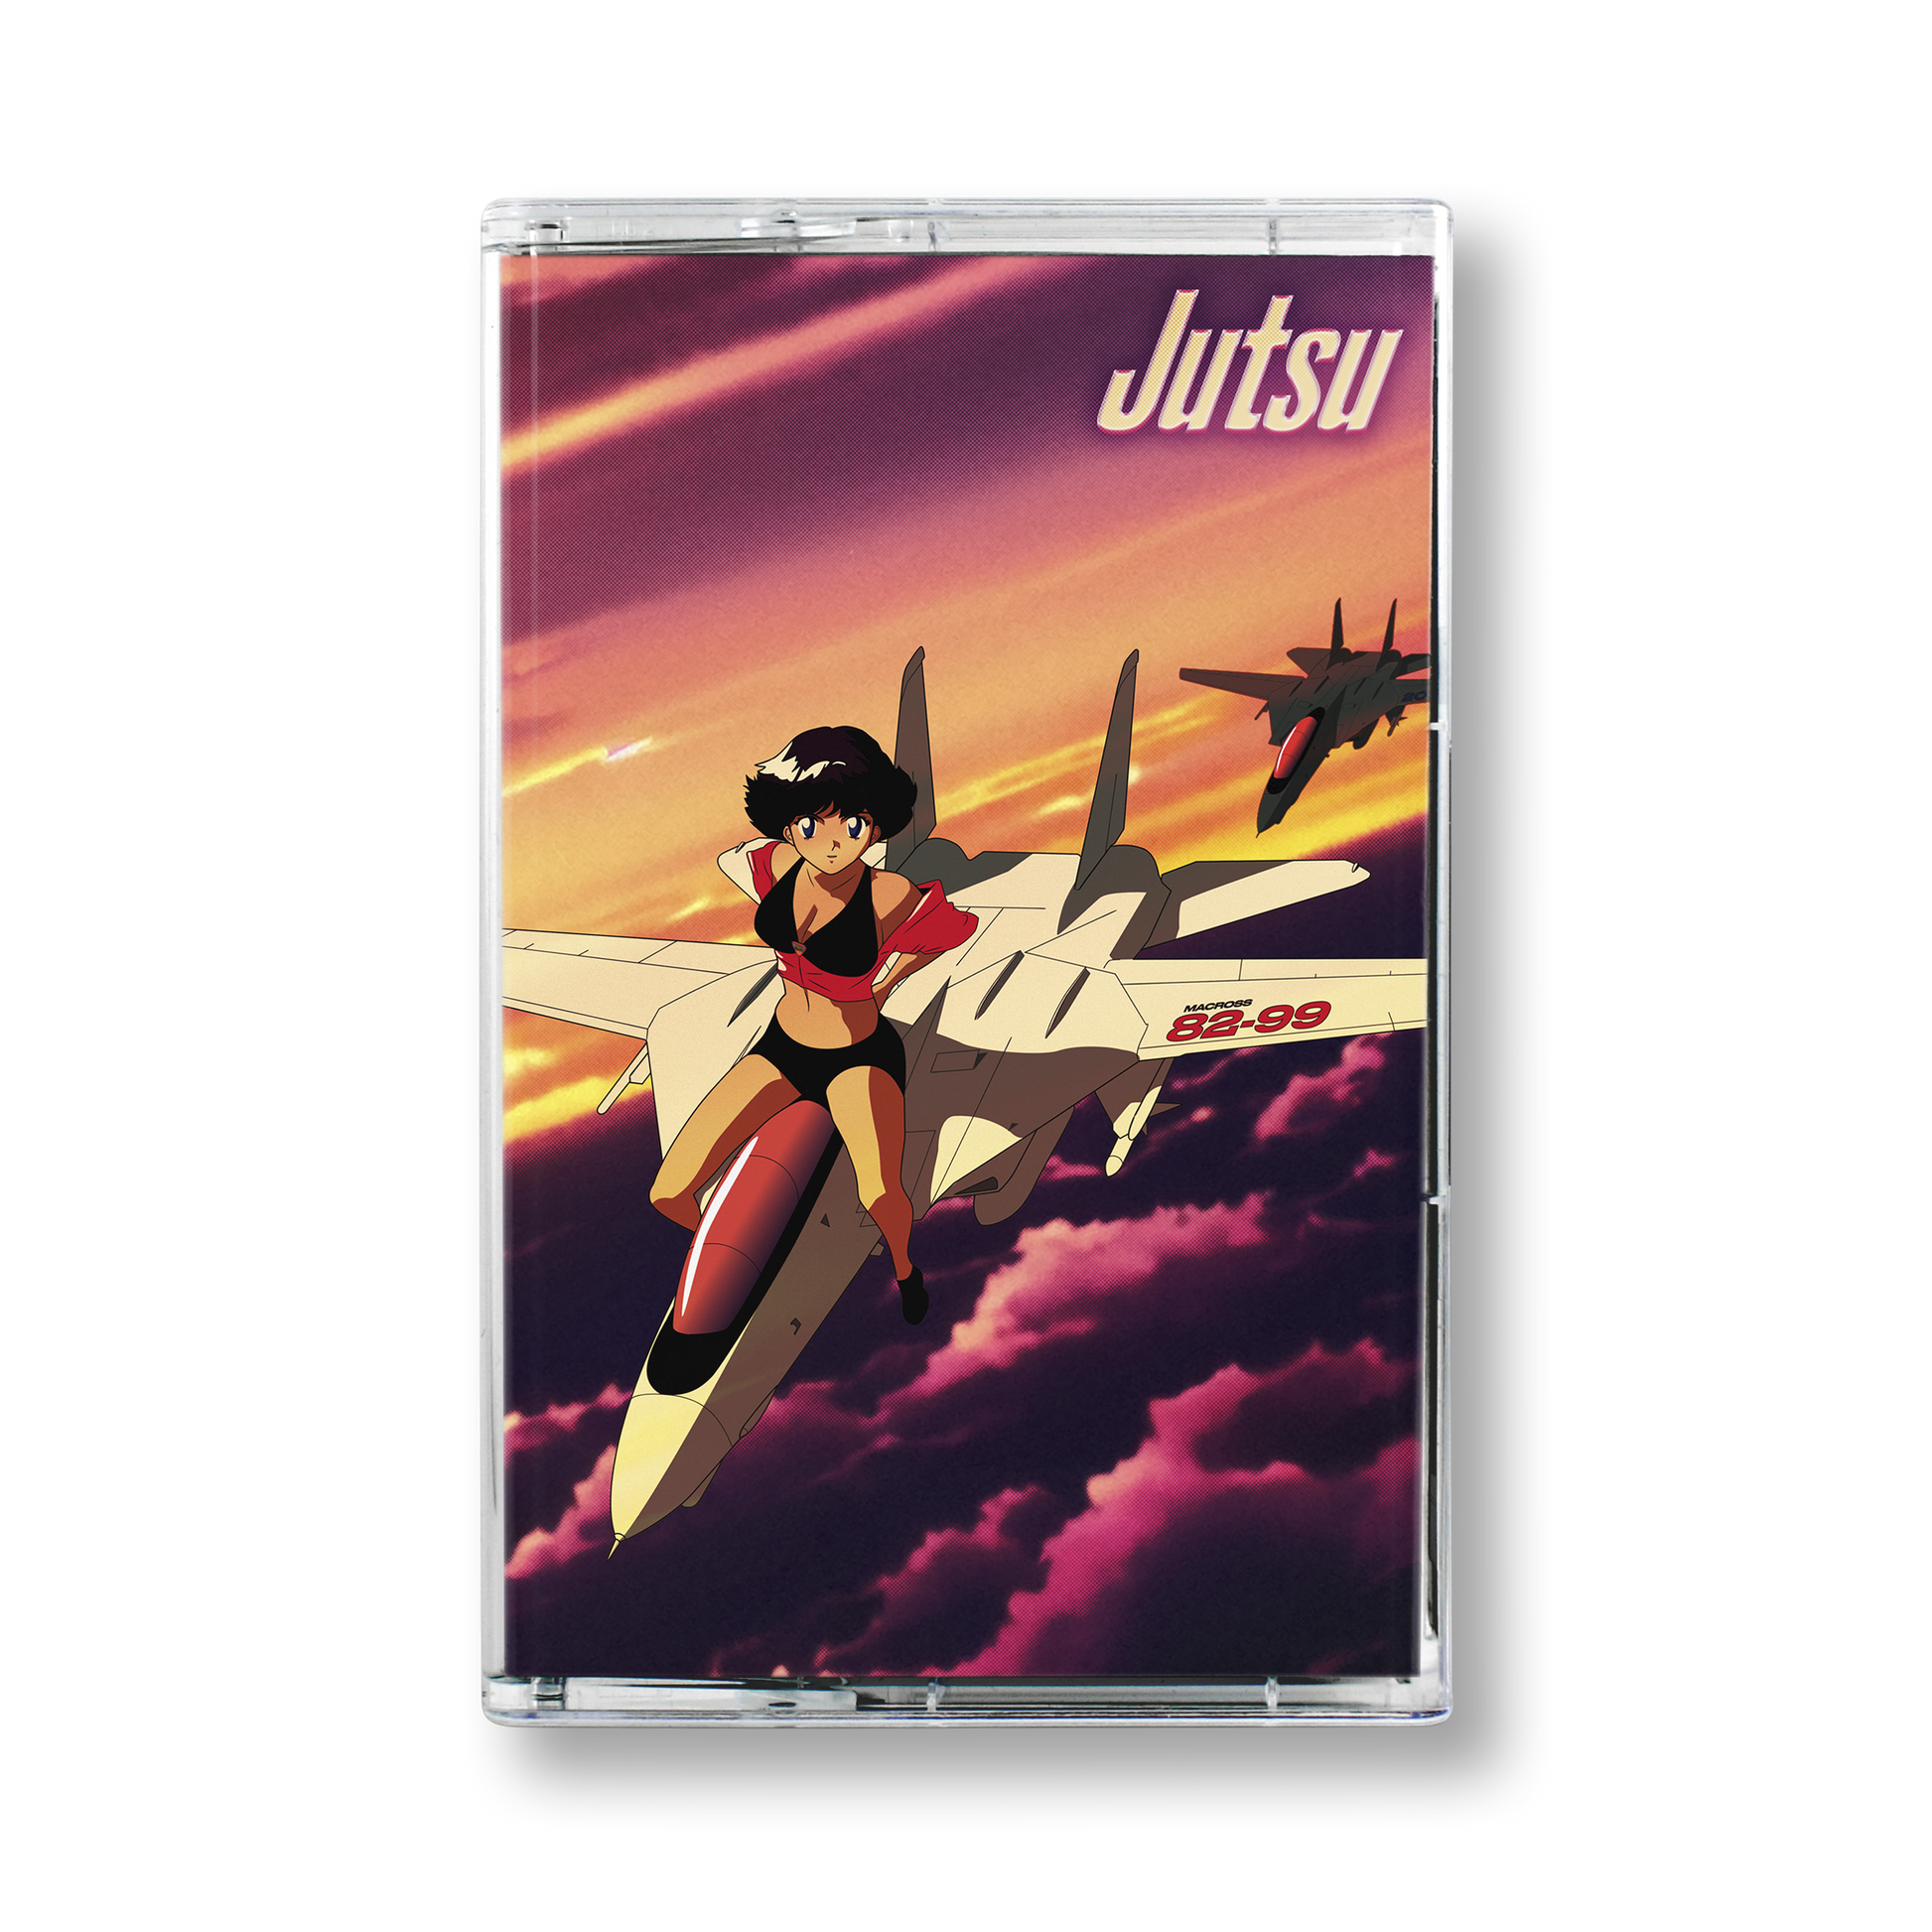 Macross 82-99 - 'Jutsu' Cassette Tape - Neoncity Records